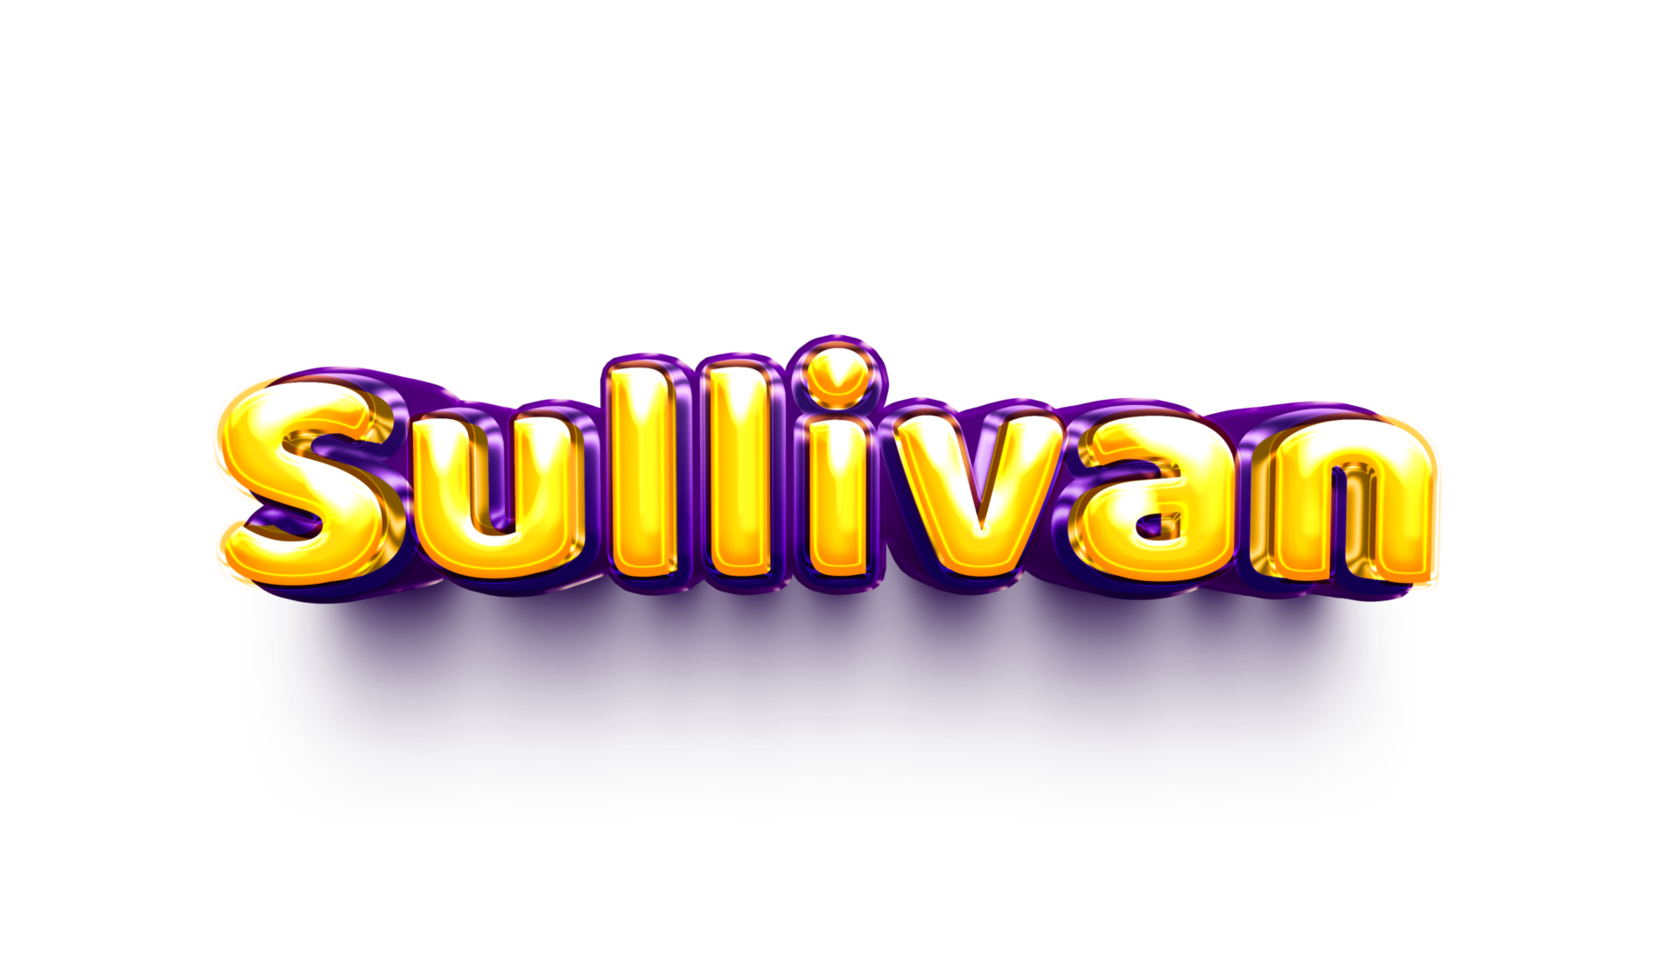 names of boys English helium balloon shiny celebration sticker 3d inflated Sullivan Sullivan png